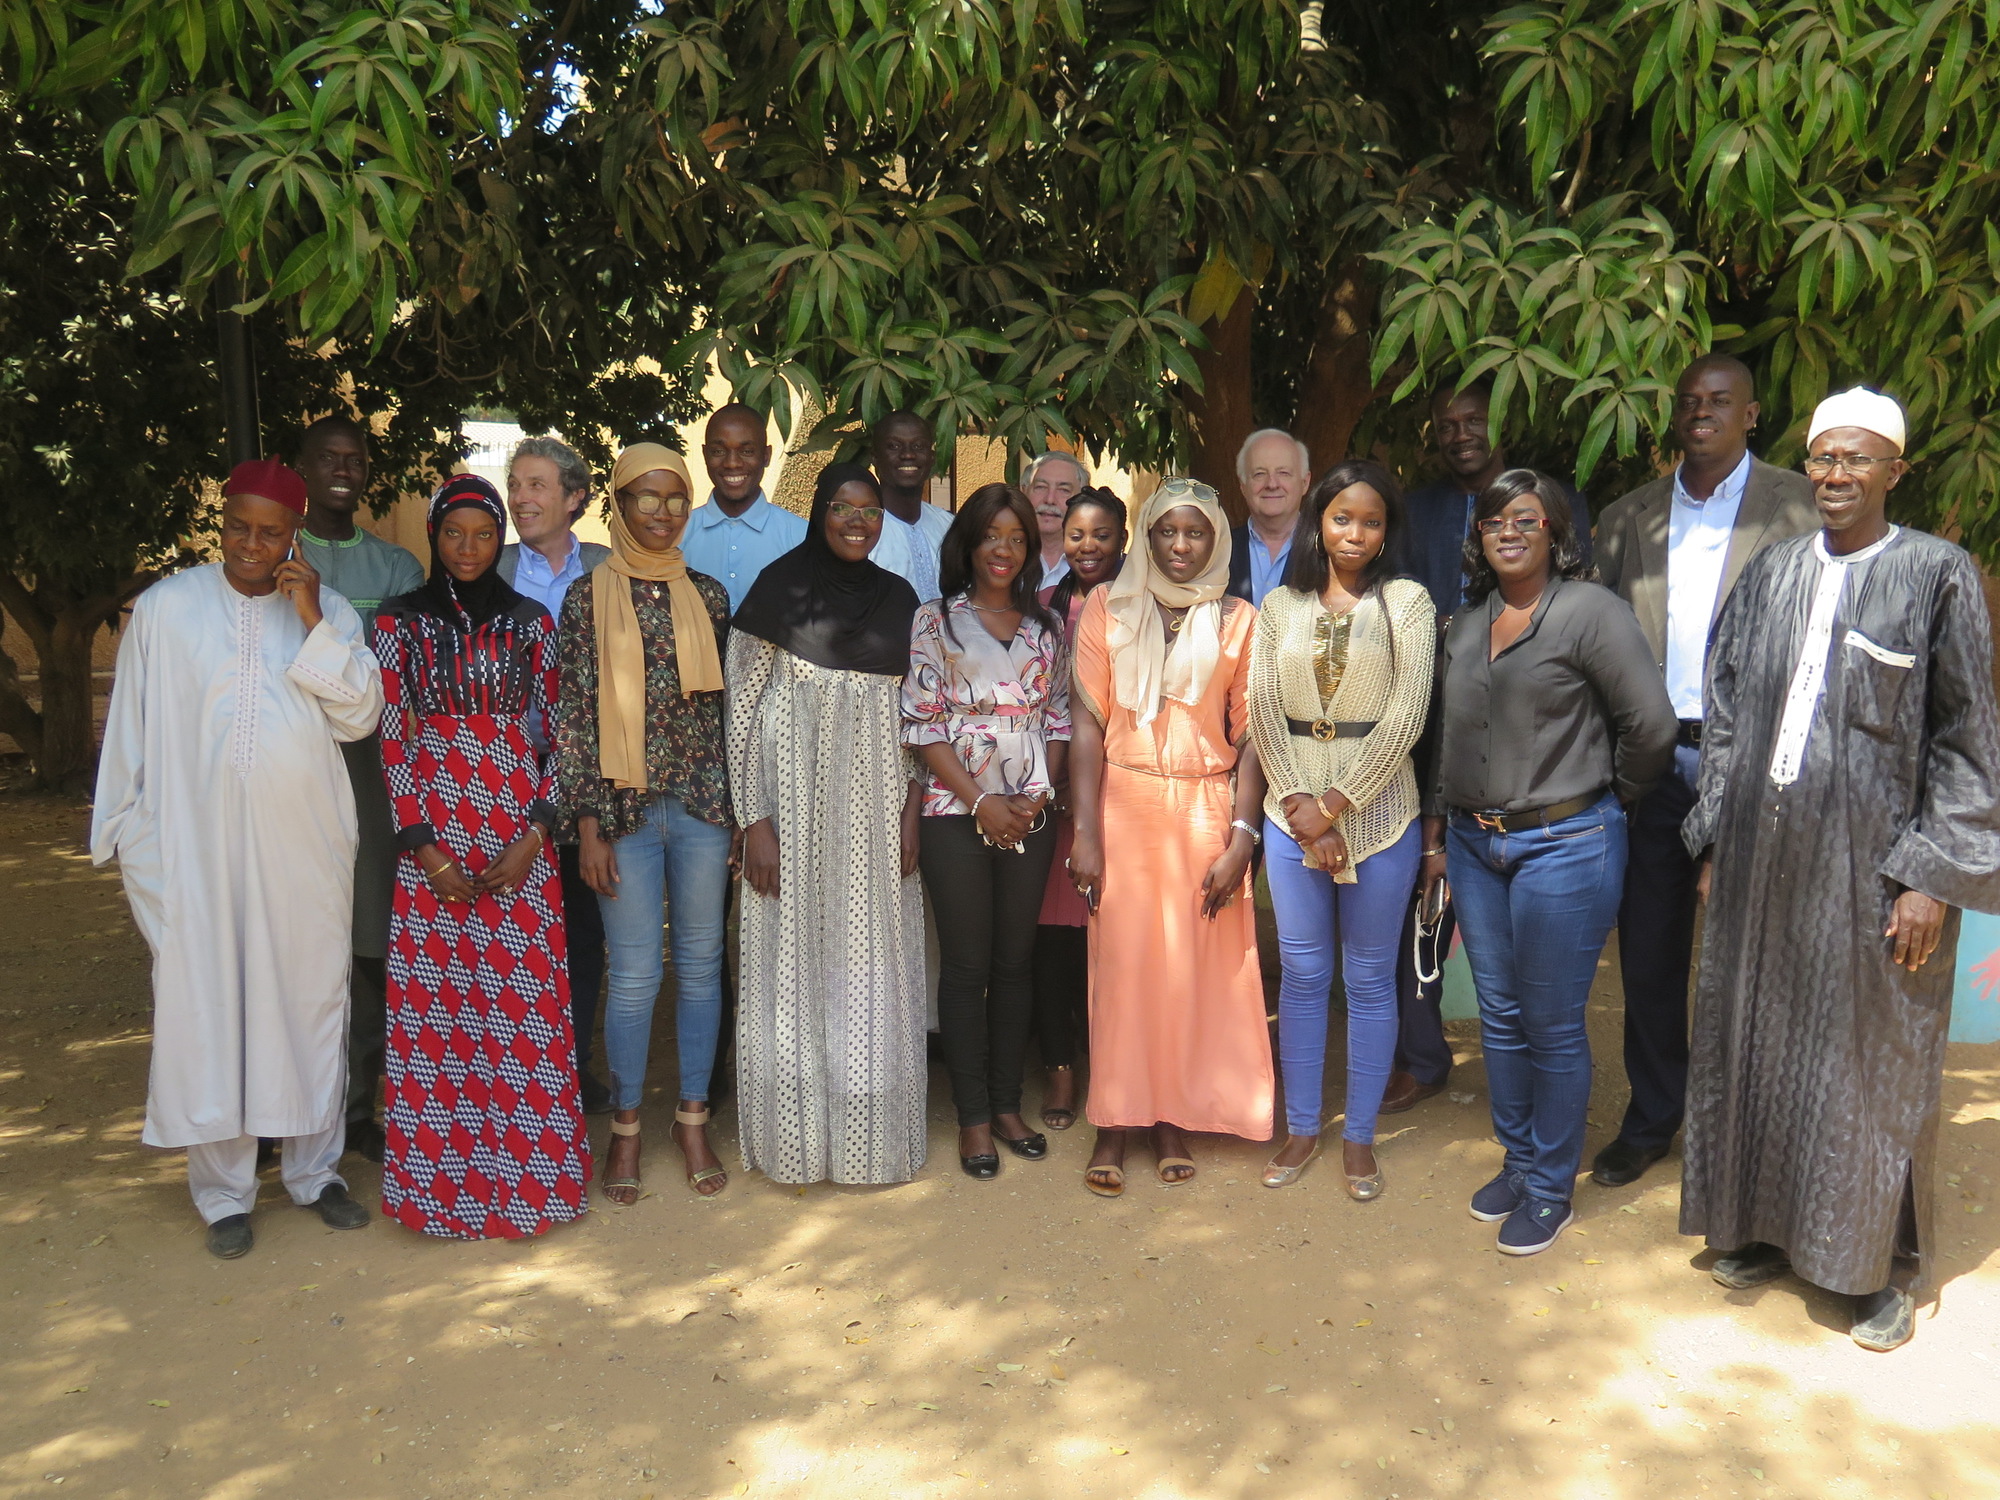 Groupe des étudiants enquêteurs du projet CRDI en compagnie de : Souleymane Dia, Aly Sada Timera, Michel Max Raynaud, Maurice Cusson, Clément Demers, Fama Laye Han, Ibrahima Ndiaye, Ibrahima Hann.